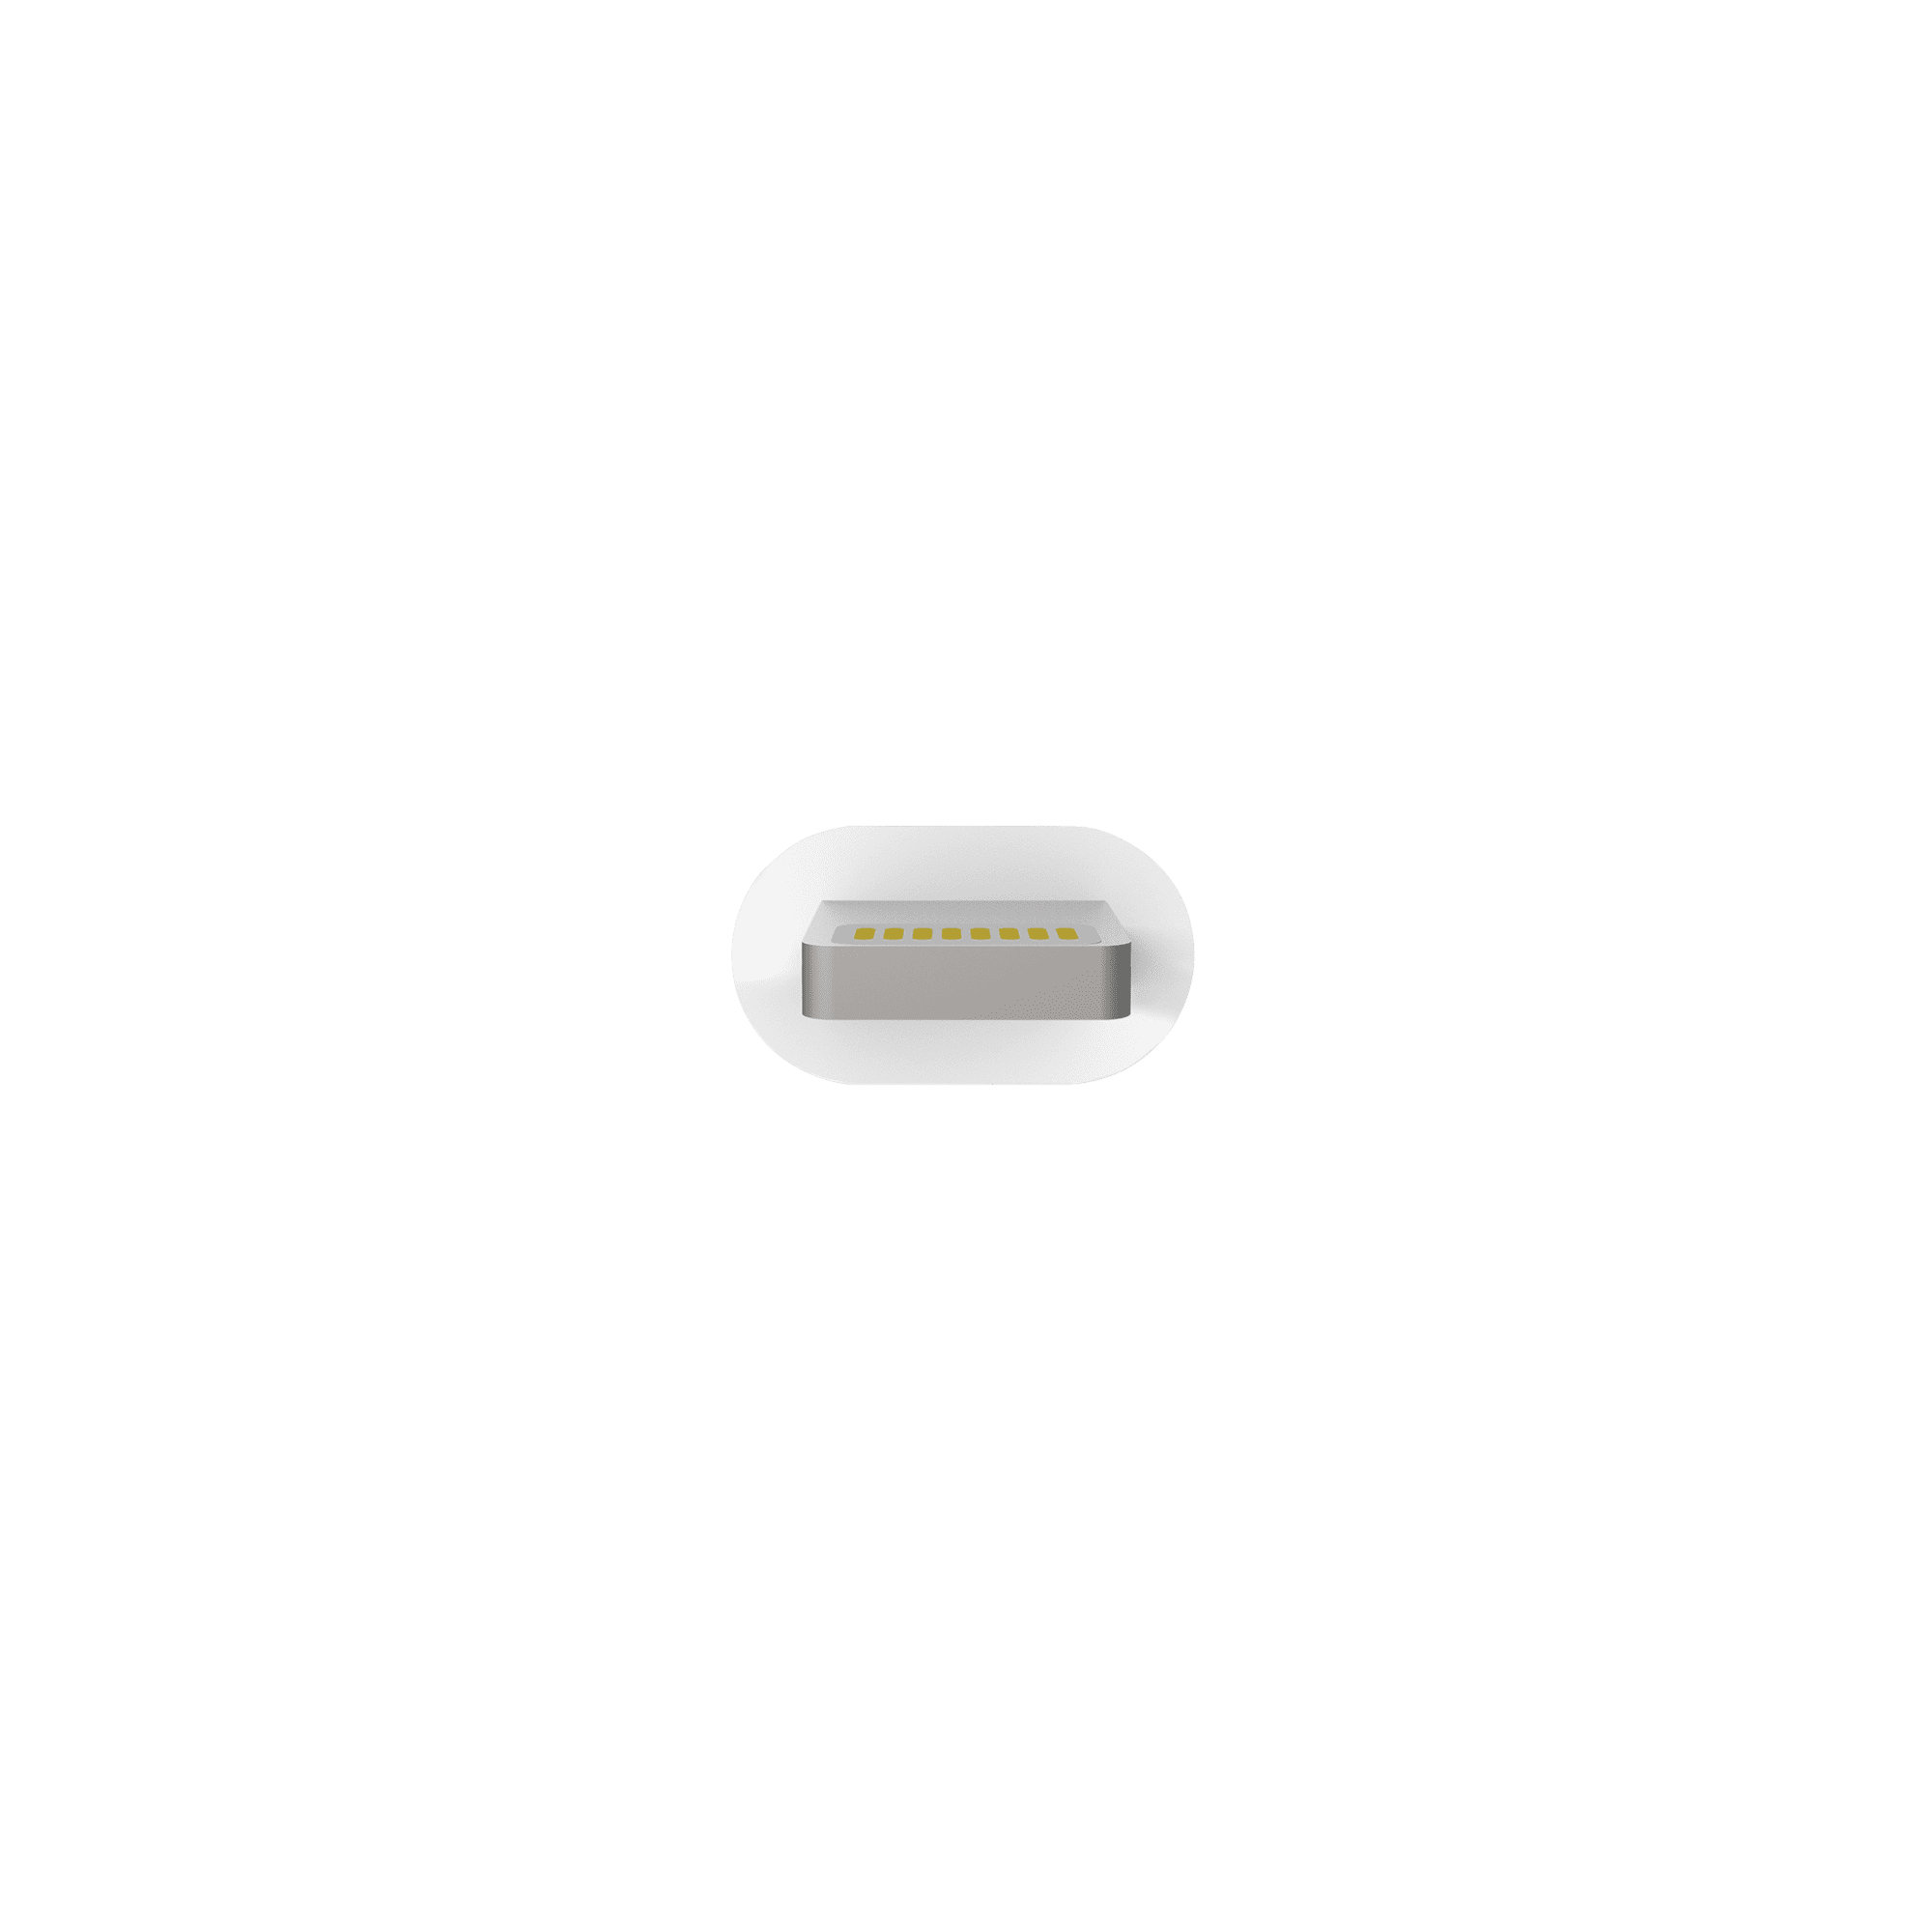 ARTWIZZ Lightning to cm, Weiß Cable, Ladekabel, 25 USB-A